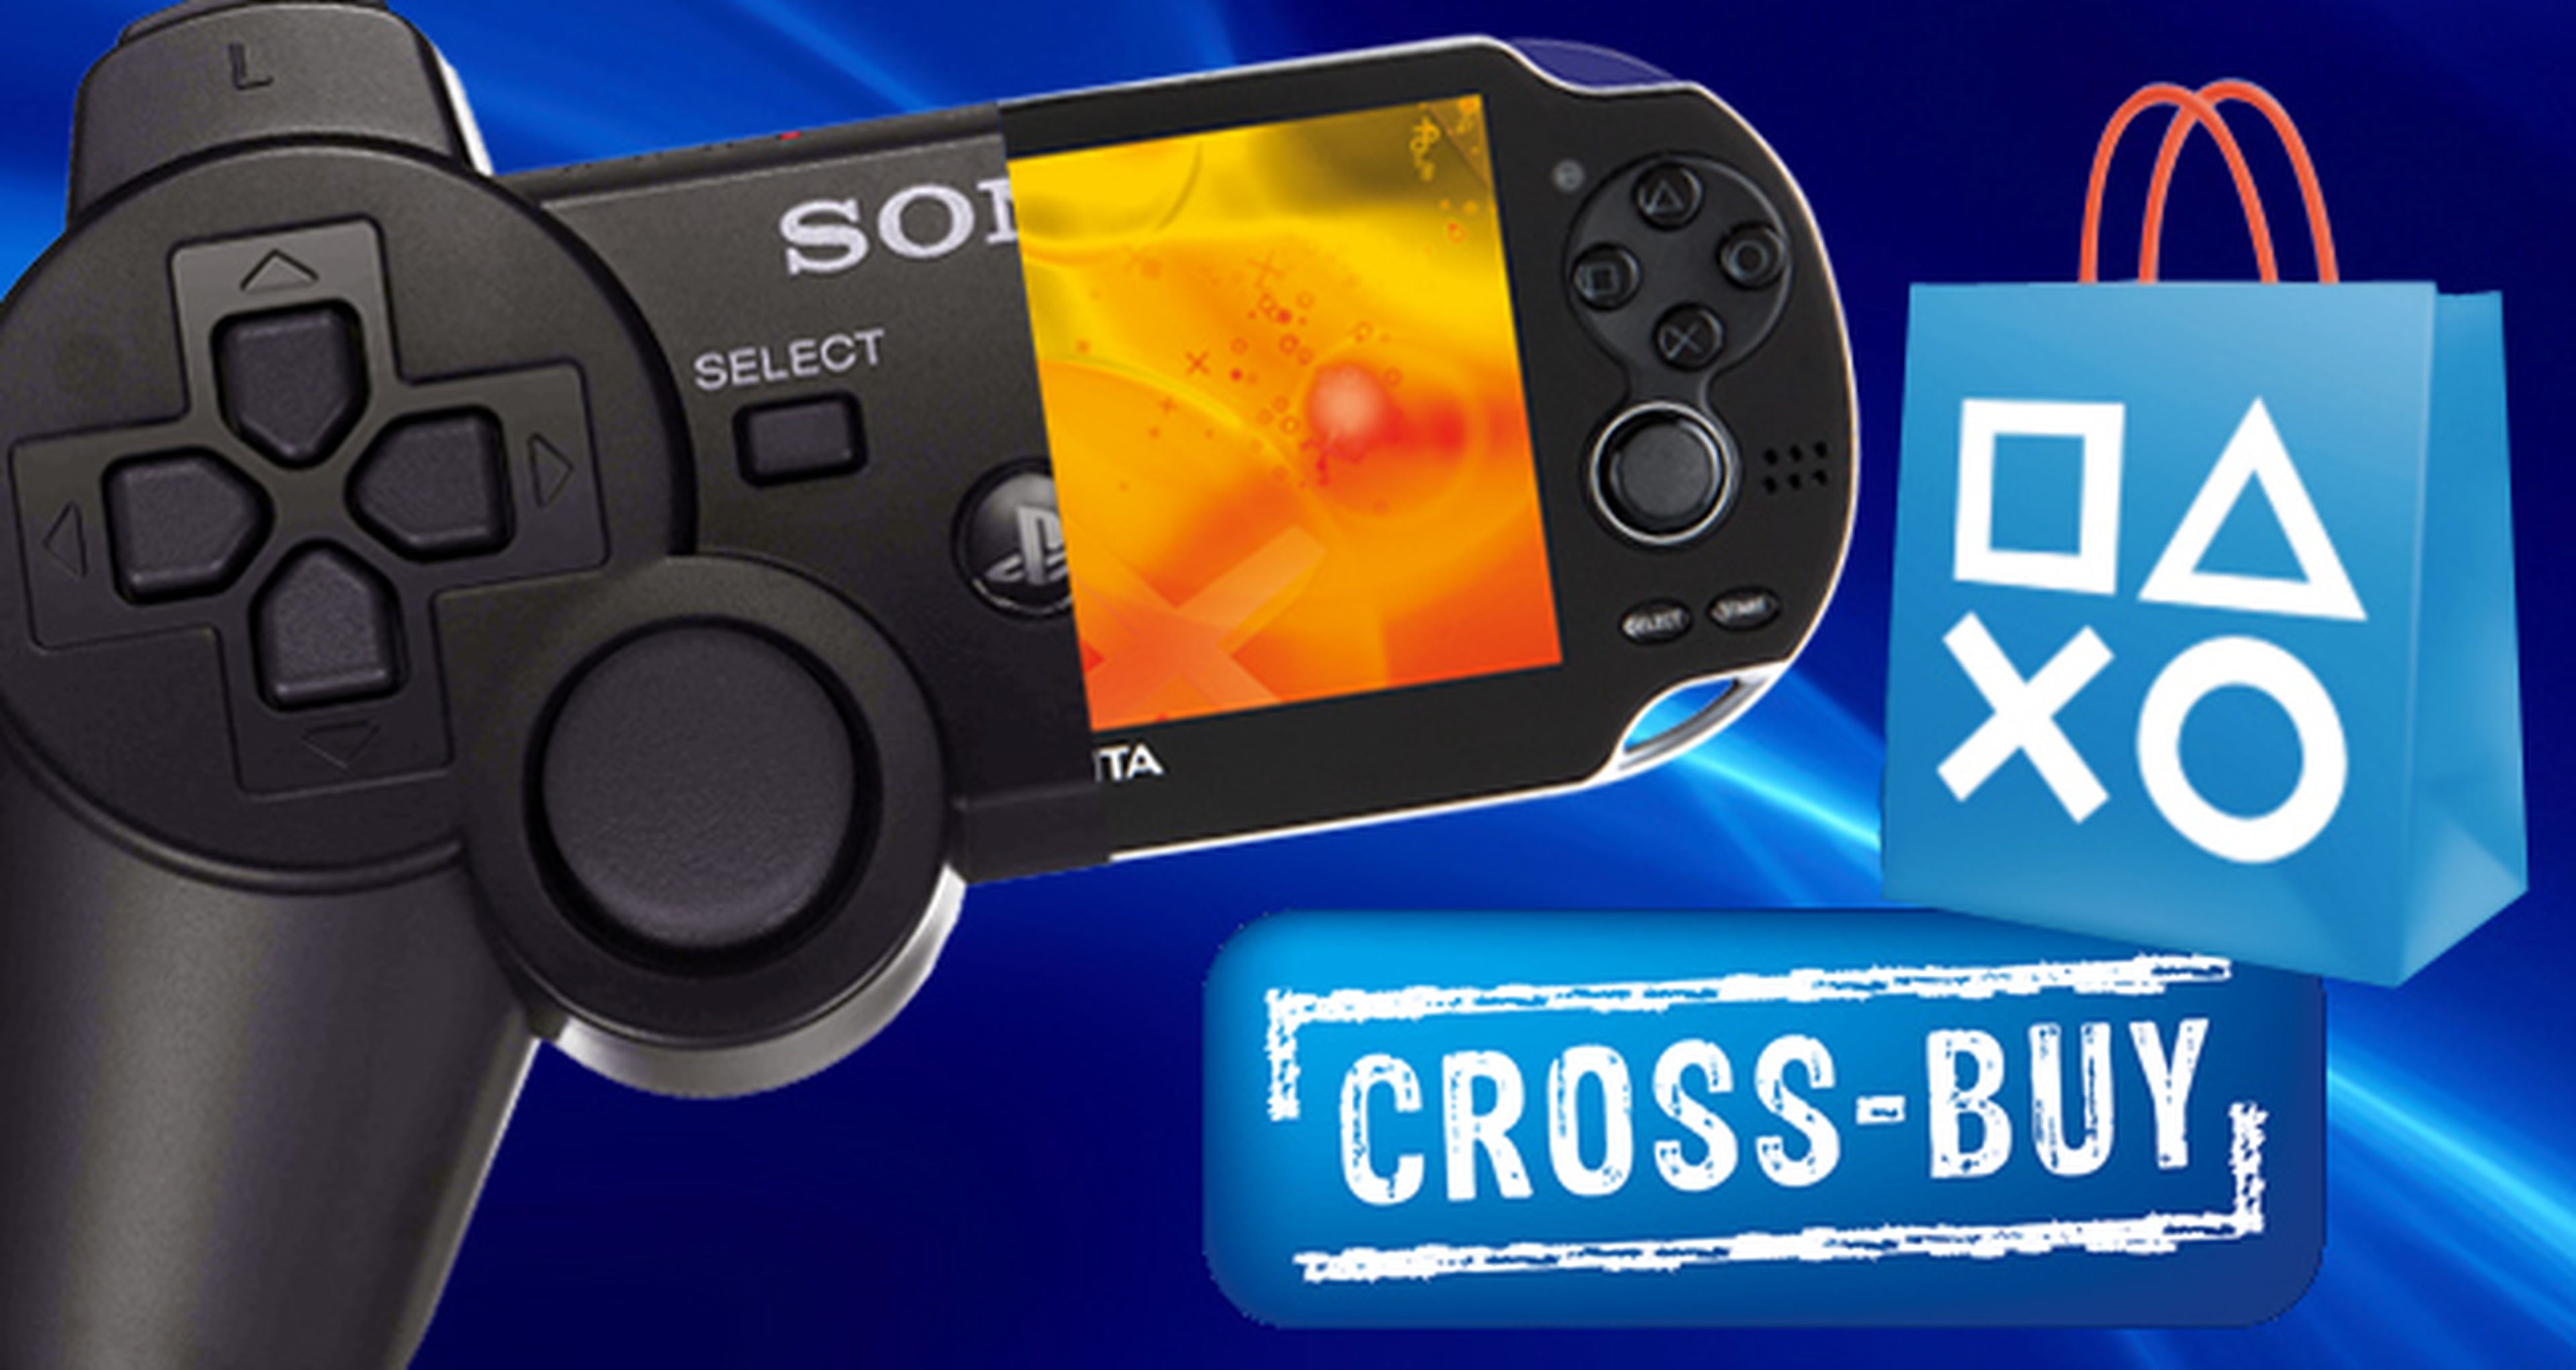 Juegos cross-buy: PS3-PS Vita (N-Z)